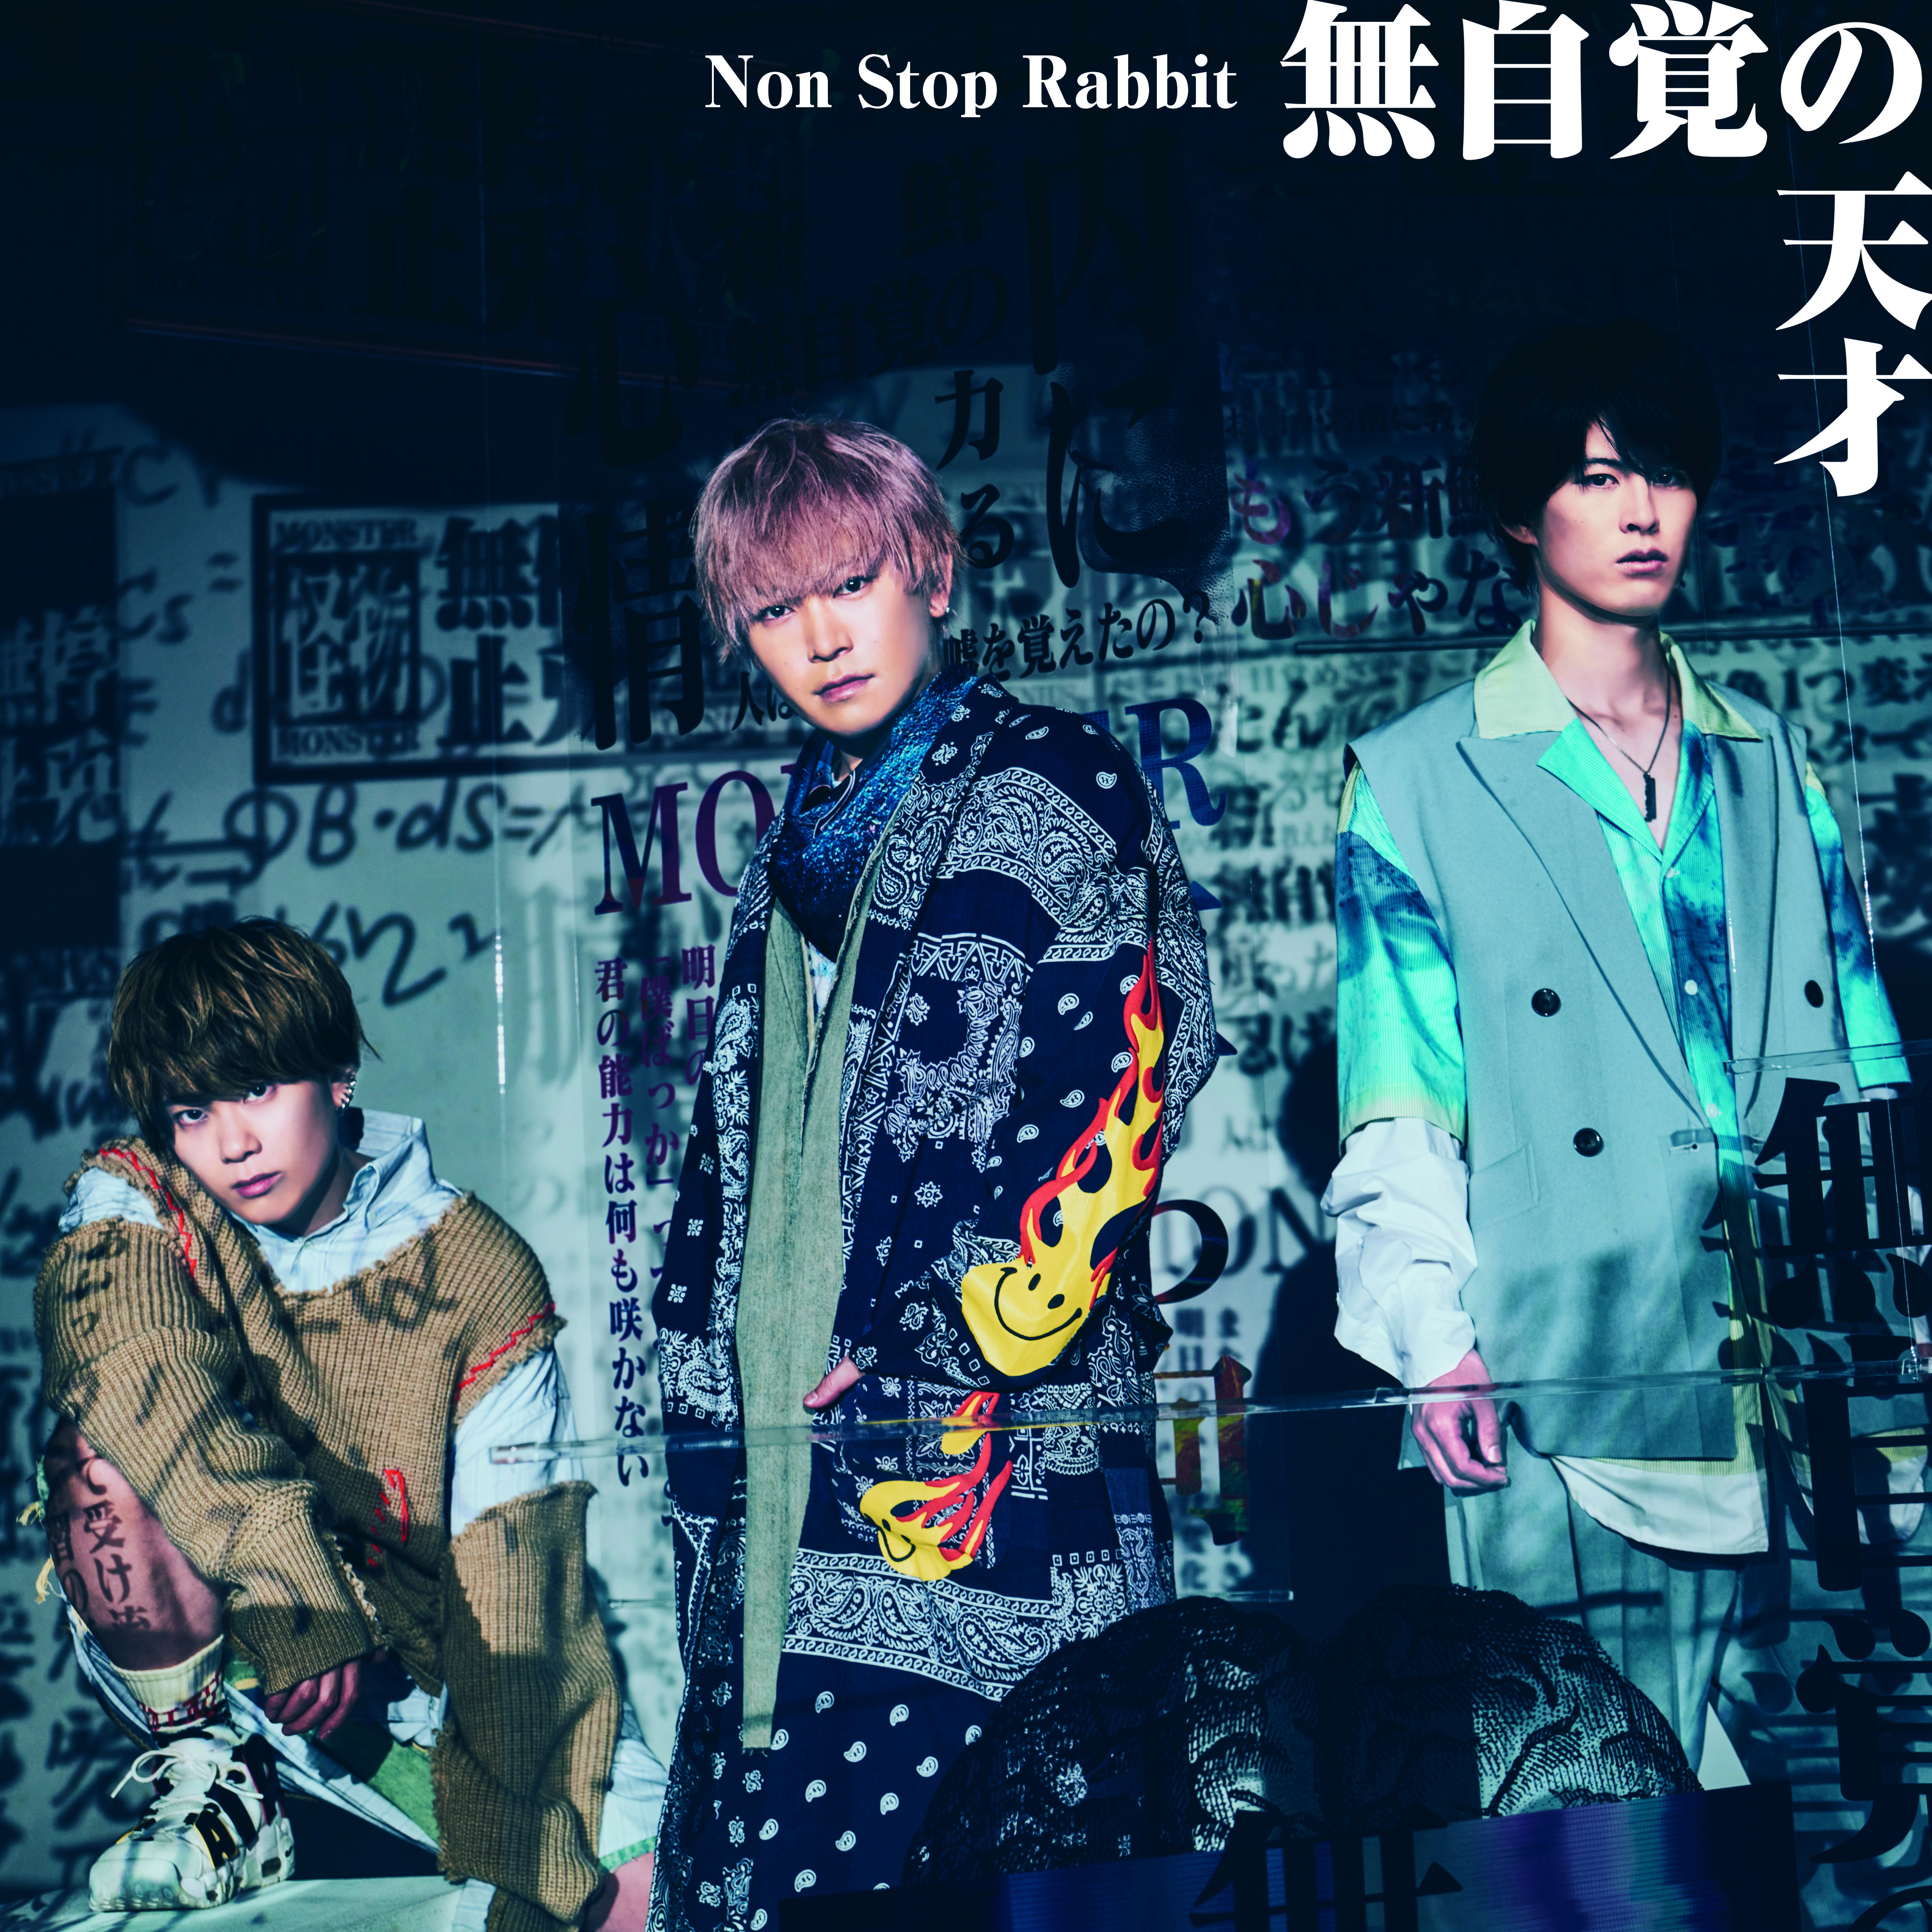 Non Stop Rabbit "Mujikaku no Tensai" Limited Edition (CD+DVD) Release on July 20th,2022 No.1